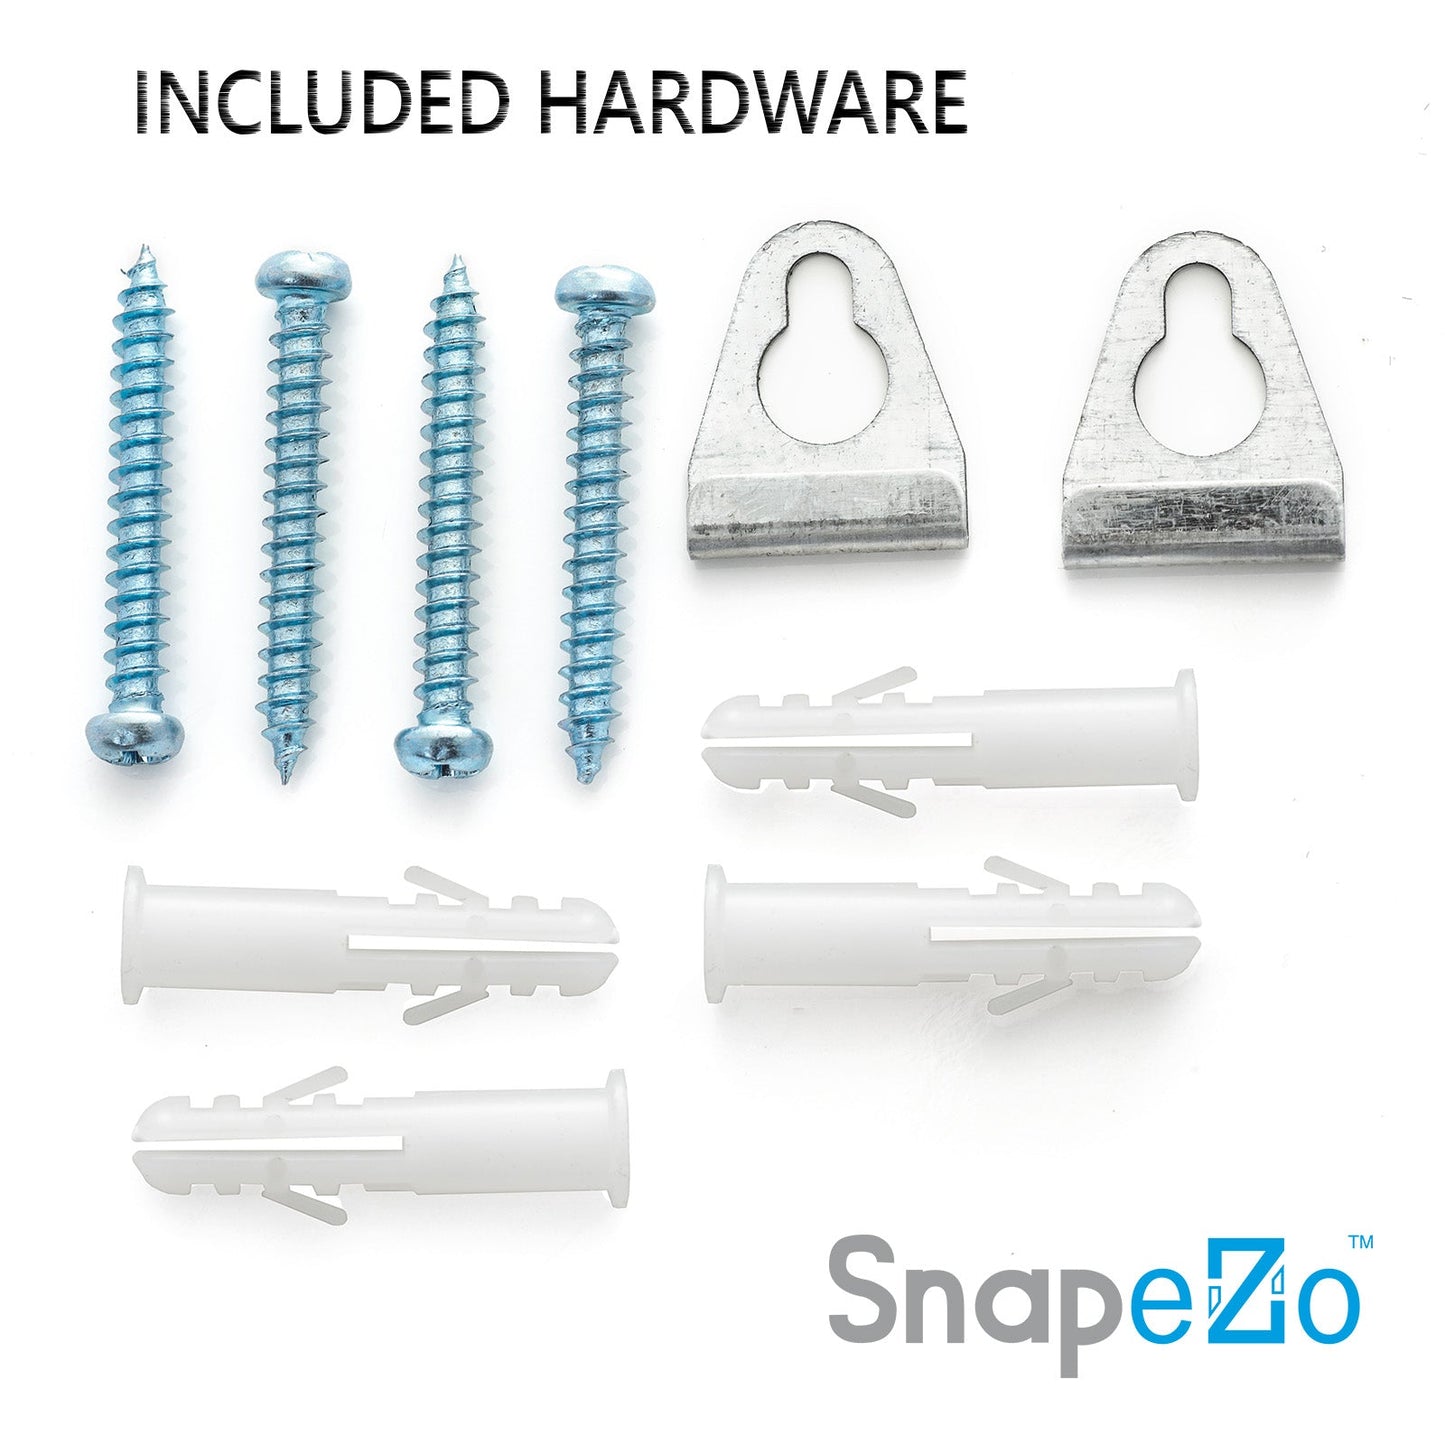 8.5x11 Silver SnapeZo® Snap Frame - 1.2" Profile